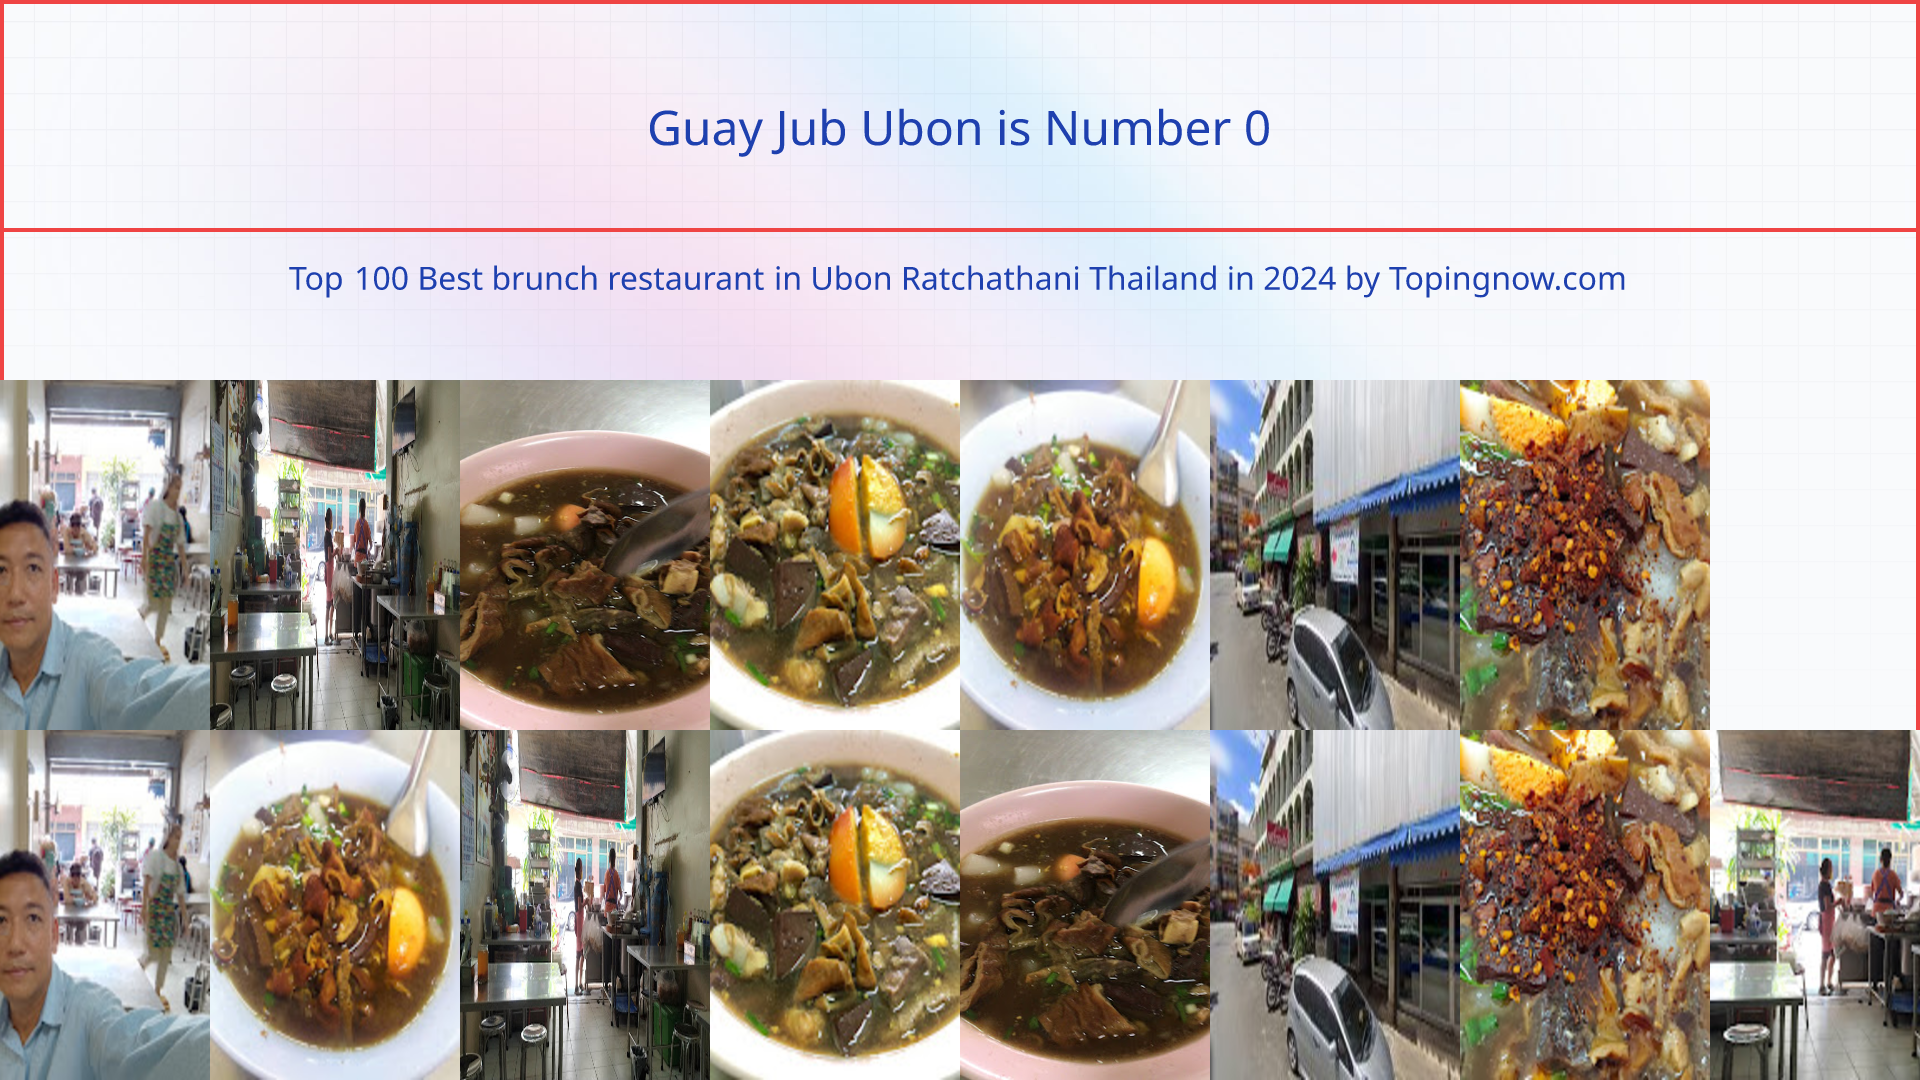 Guay Jub Ubon: Top 100 Best brunch restaurant in Ubon Ratchathani Thailand in 2024